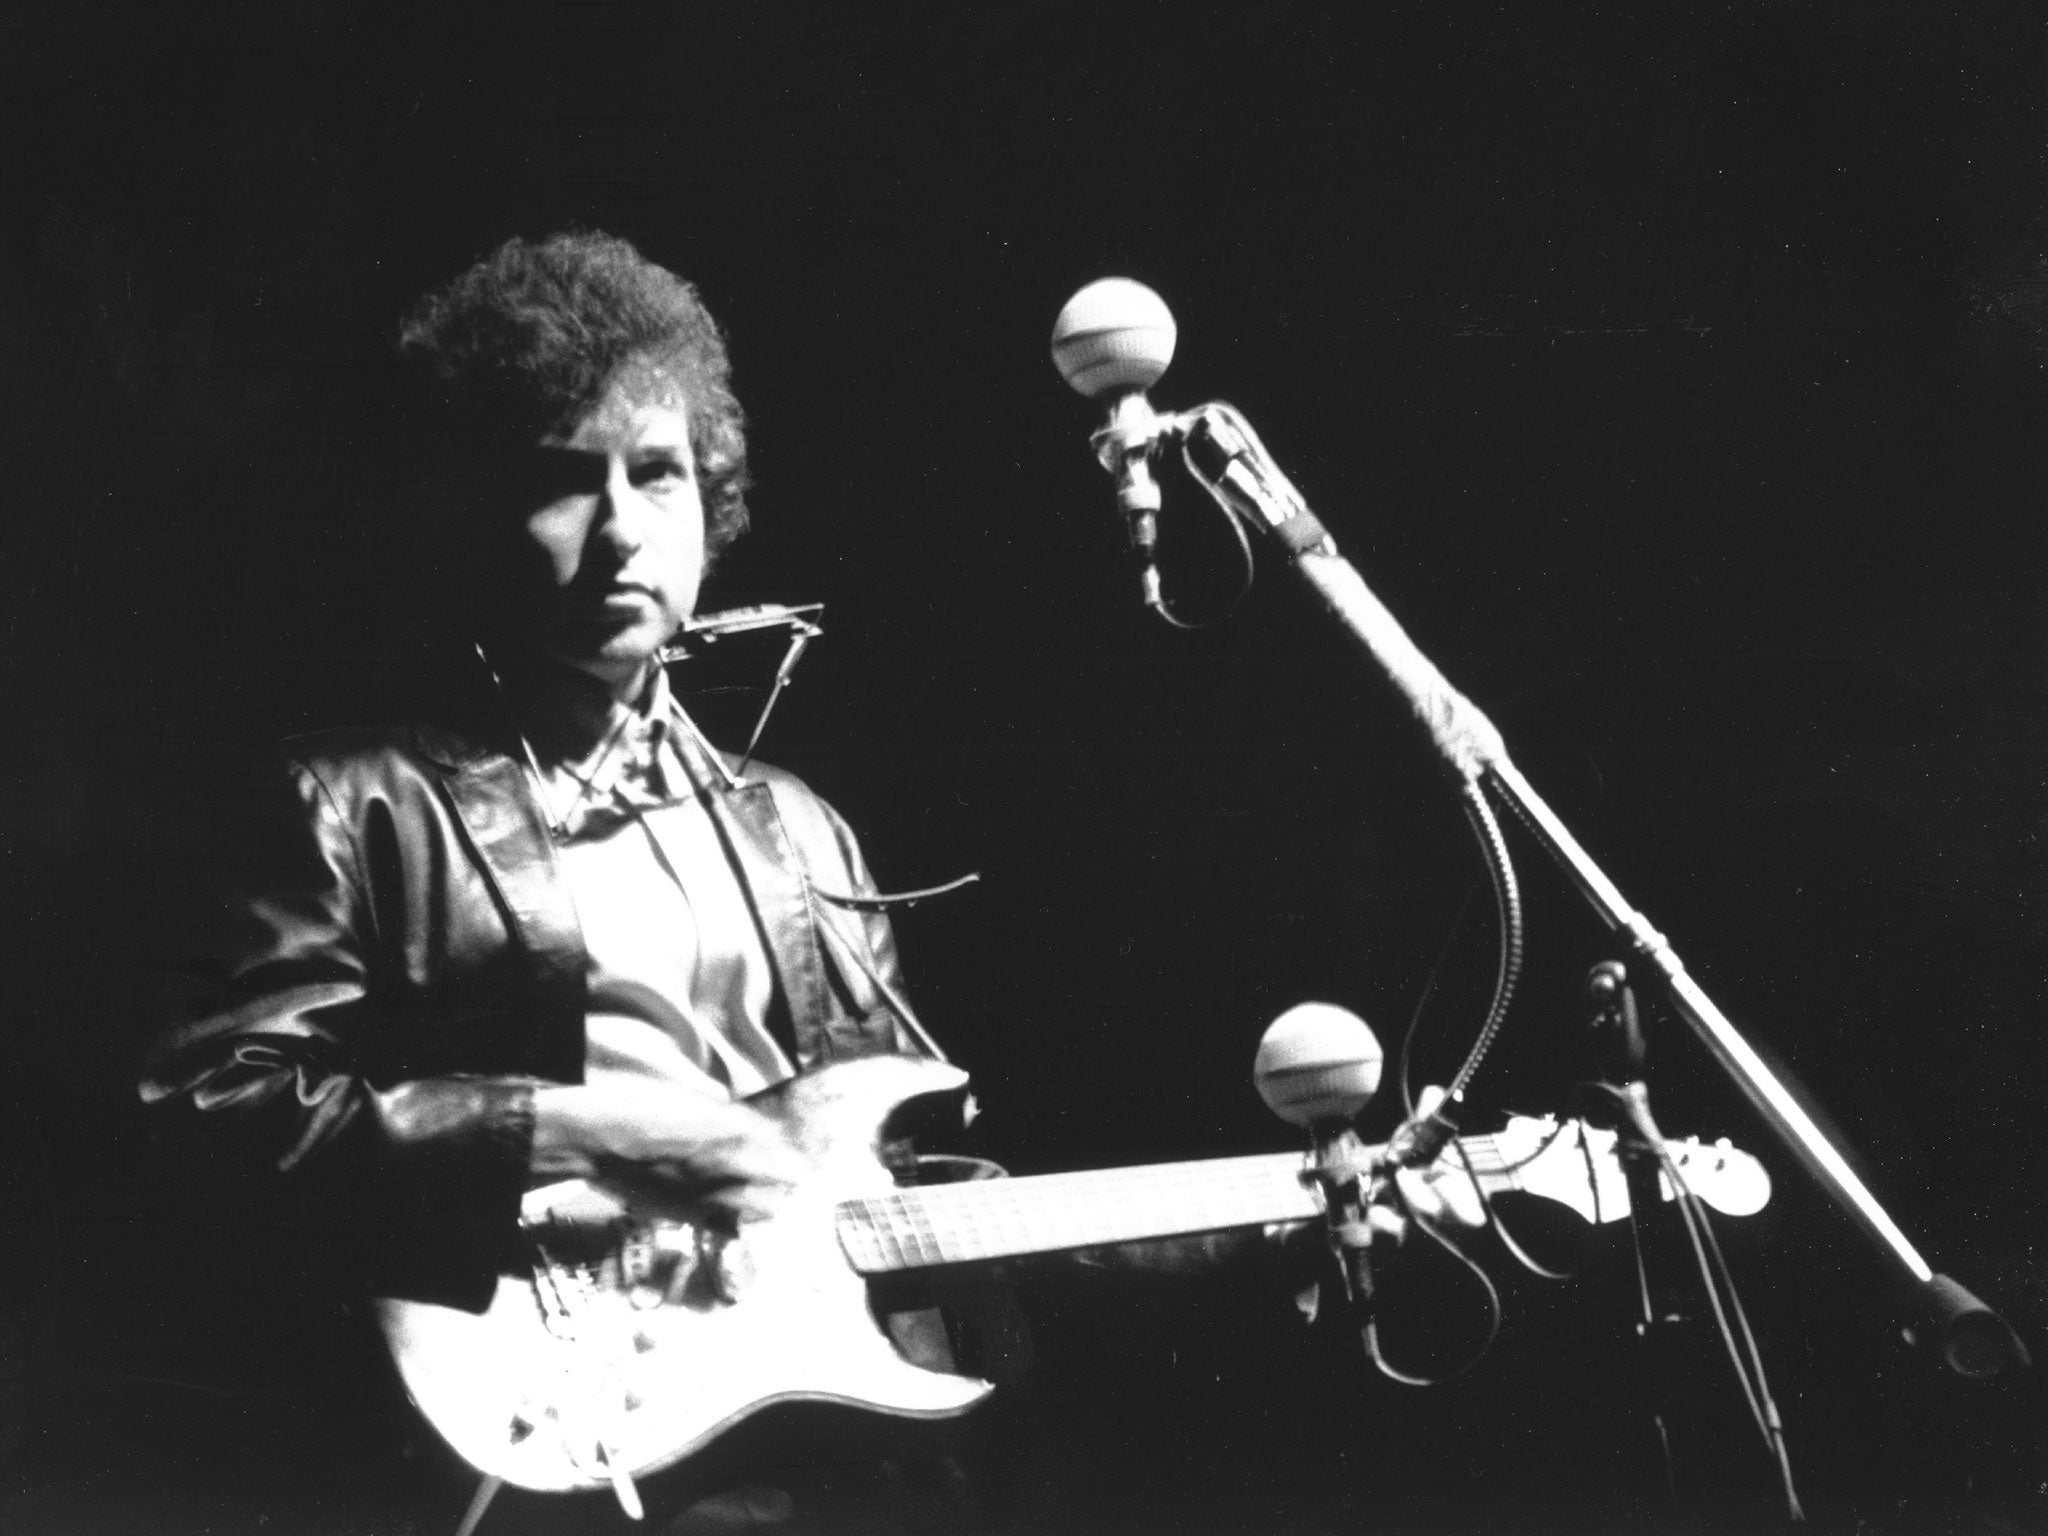 Bob Dylan at the Newport Folk Festival in 1965